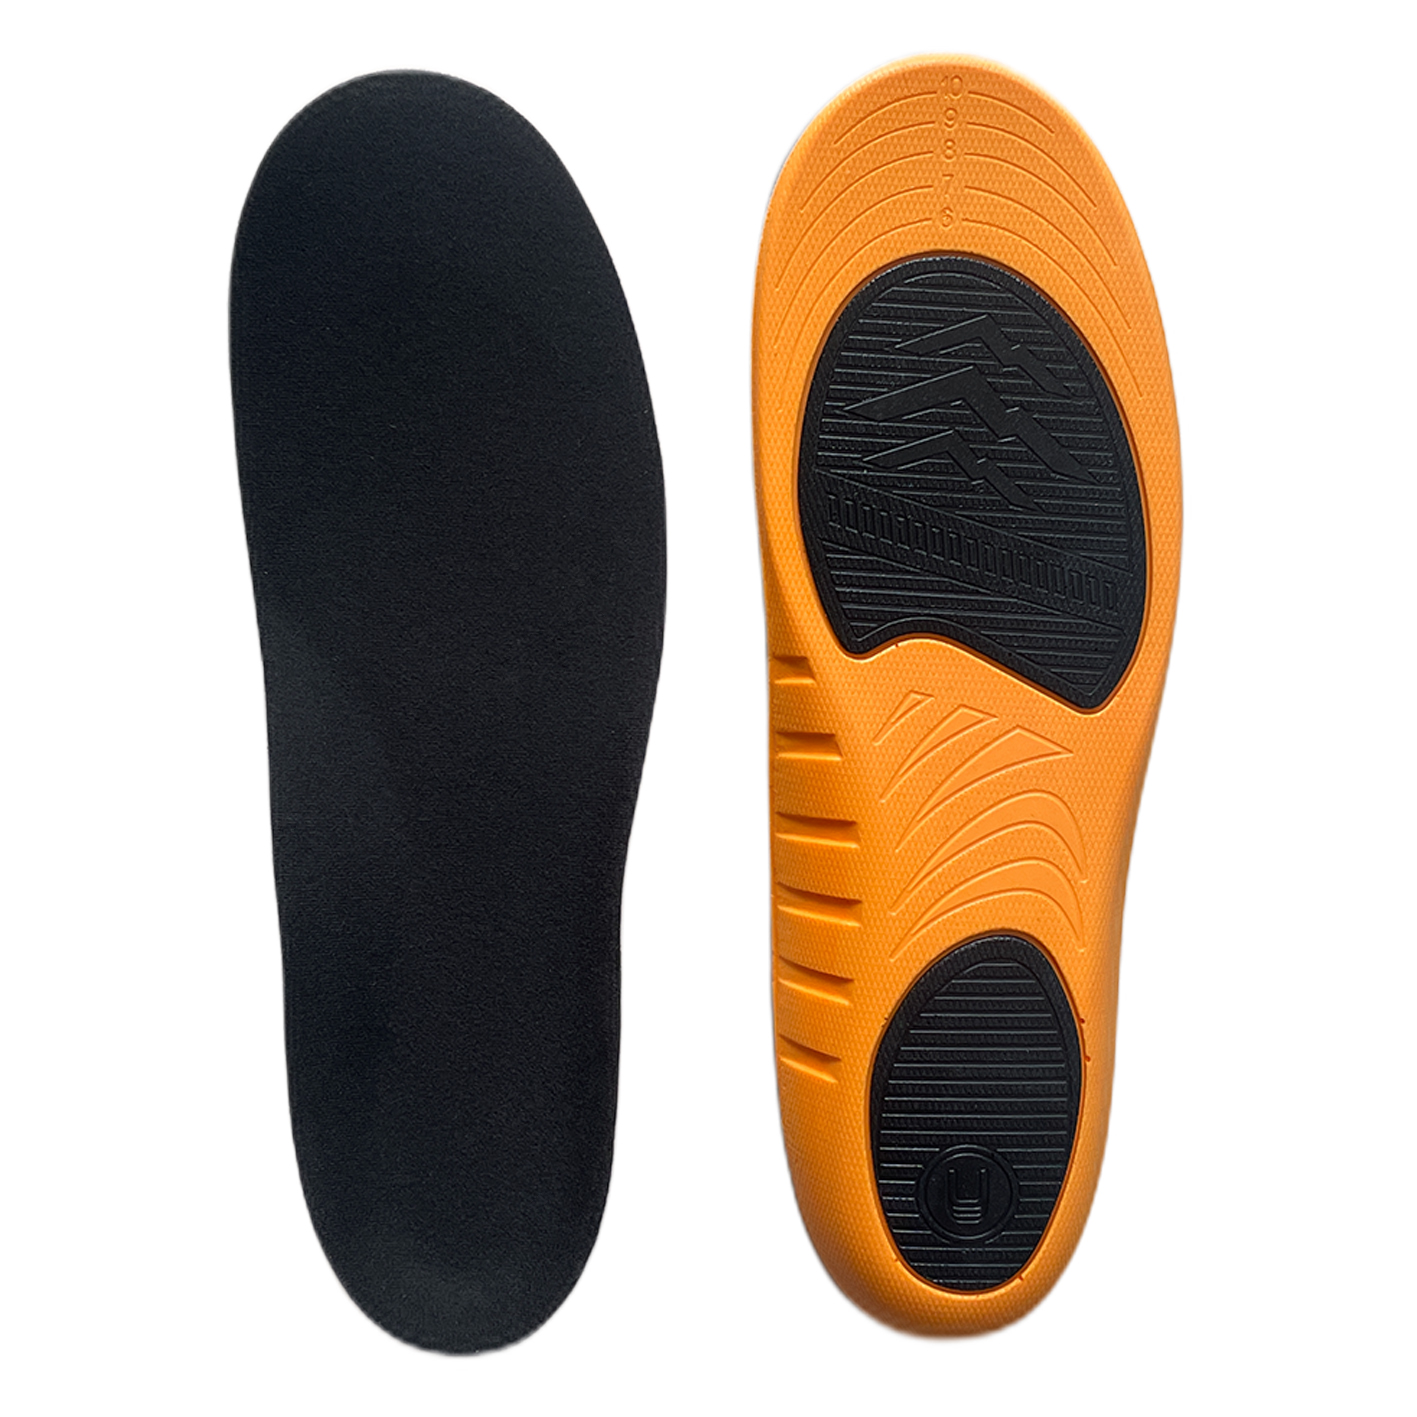 Custom elastic pu foam sport pain relieve insoles shoe insert Featured Image